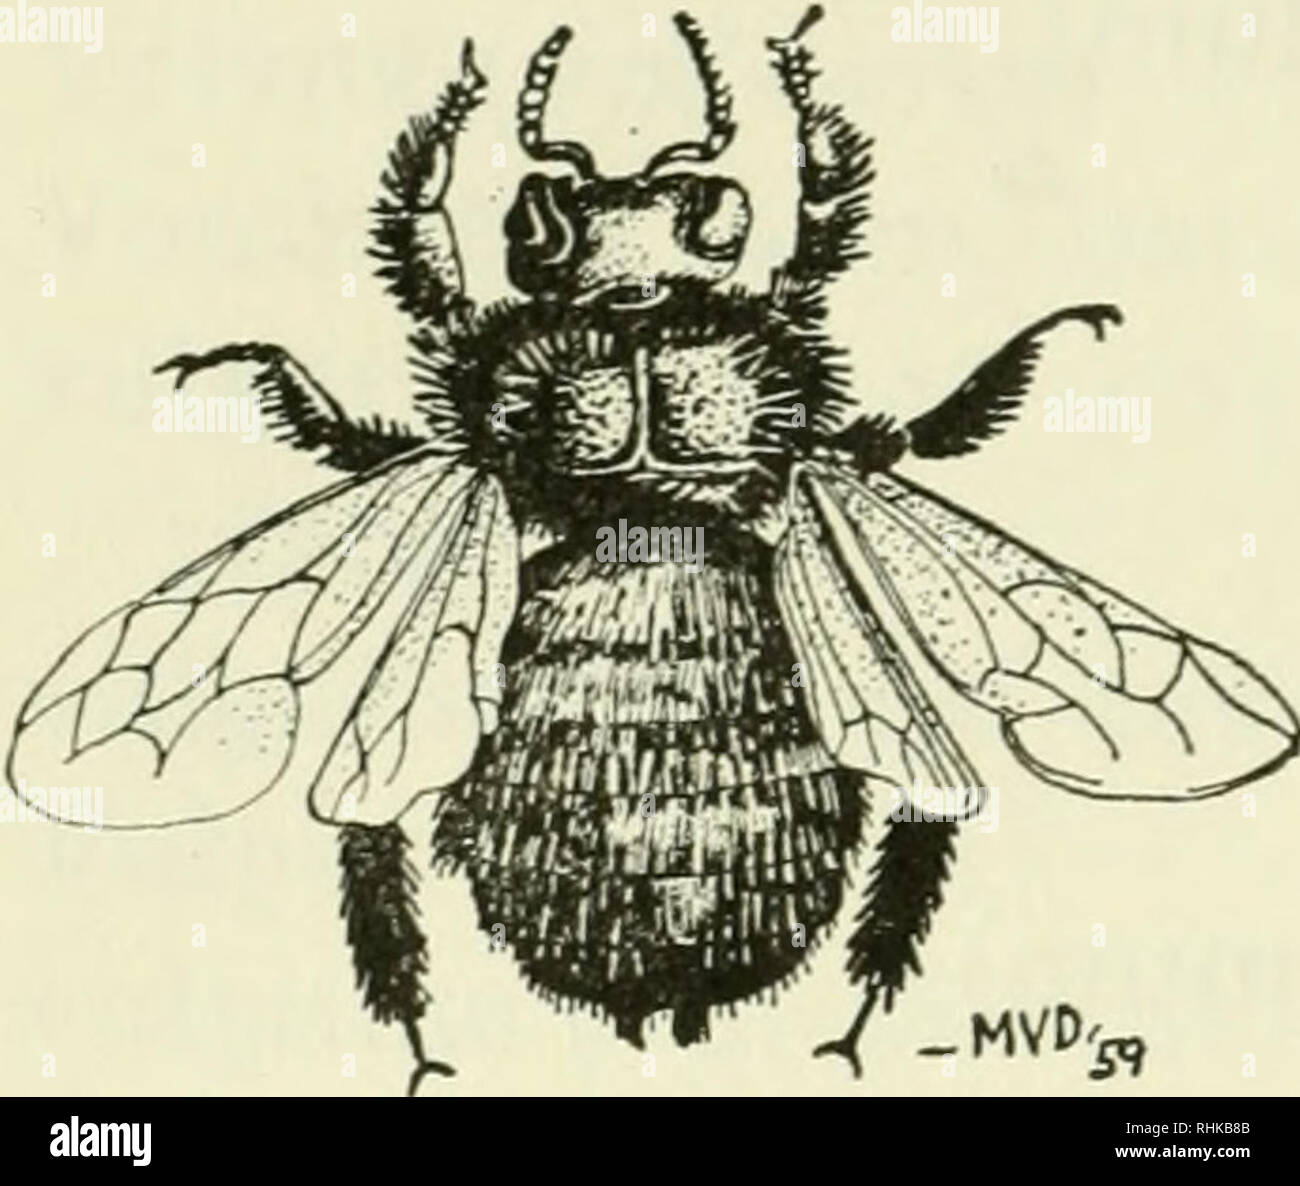 . The biologist's handbook of pronunciations. Biology. 316 XYRIS. -MVD-, Xylocopa &lt;Gr. xylos, wood+tomo, to cut. Generic name of the wood cutting bees. Pronounced: zl-lok'-o-pa, not zl-lo-ko'-pa. Xyris* (zl'-ris, zir'-is) Xysticus (zis'-ti-kus) yolk (yok, yolk) Yponomeutidae (ip-o-no-mut'-i-de) Yucca (yu'-ka) Zaglossus (zag-los'-us, zag-lo'-sus) Zaitha (za'-tha) Zalophus (zal'-o-fus) Zamenis (zam'-e-nis) Zamia (za'-mi-a) Zanclus (zang'-klus) Zanonia* (za-no'-ni-a) Zapus (za'-pus) Zea* (ze'-a) Zelotes (ze-lo'-tez) Zenobia* (zen-o'-bi-a) Zephyranthes* (zef-i-ran'-thez) zerda (zer'-da) Zeus (z Stock Photo